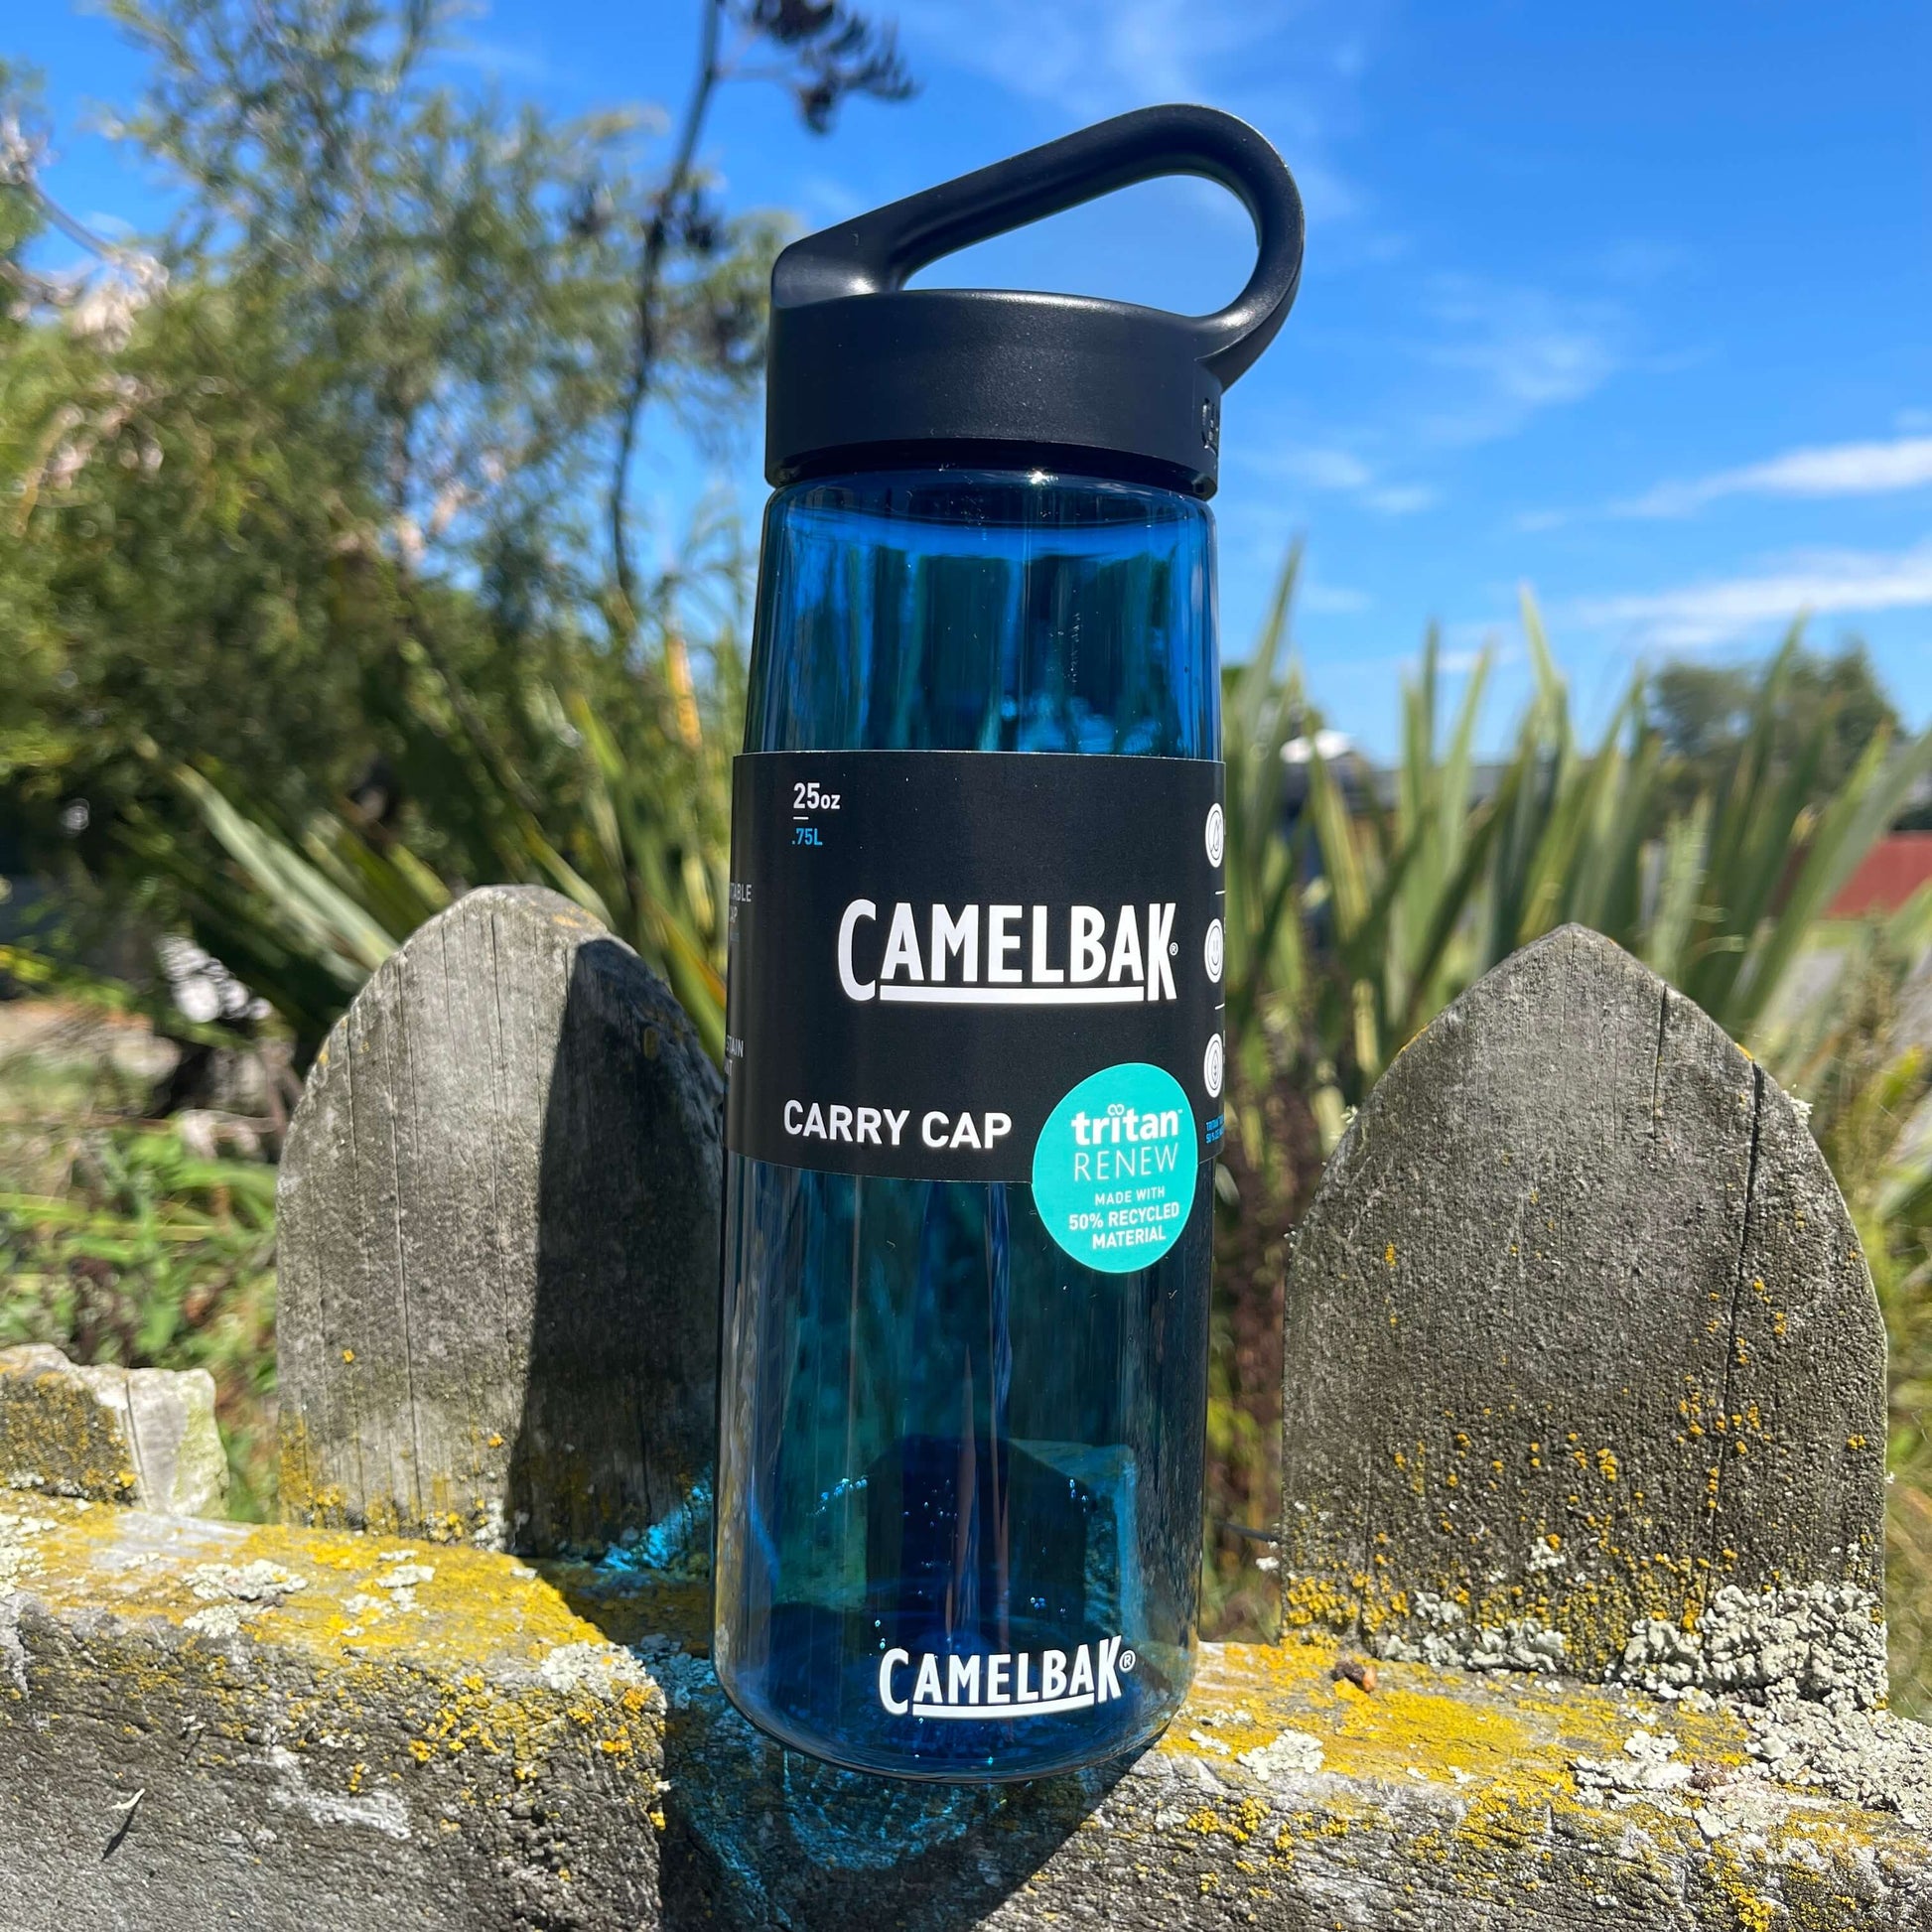 Camelbak Carry Cap drink bottle in blue.